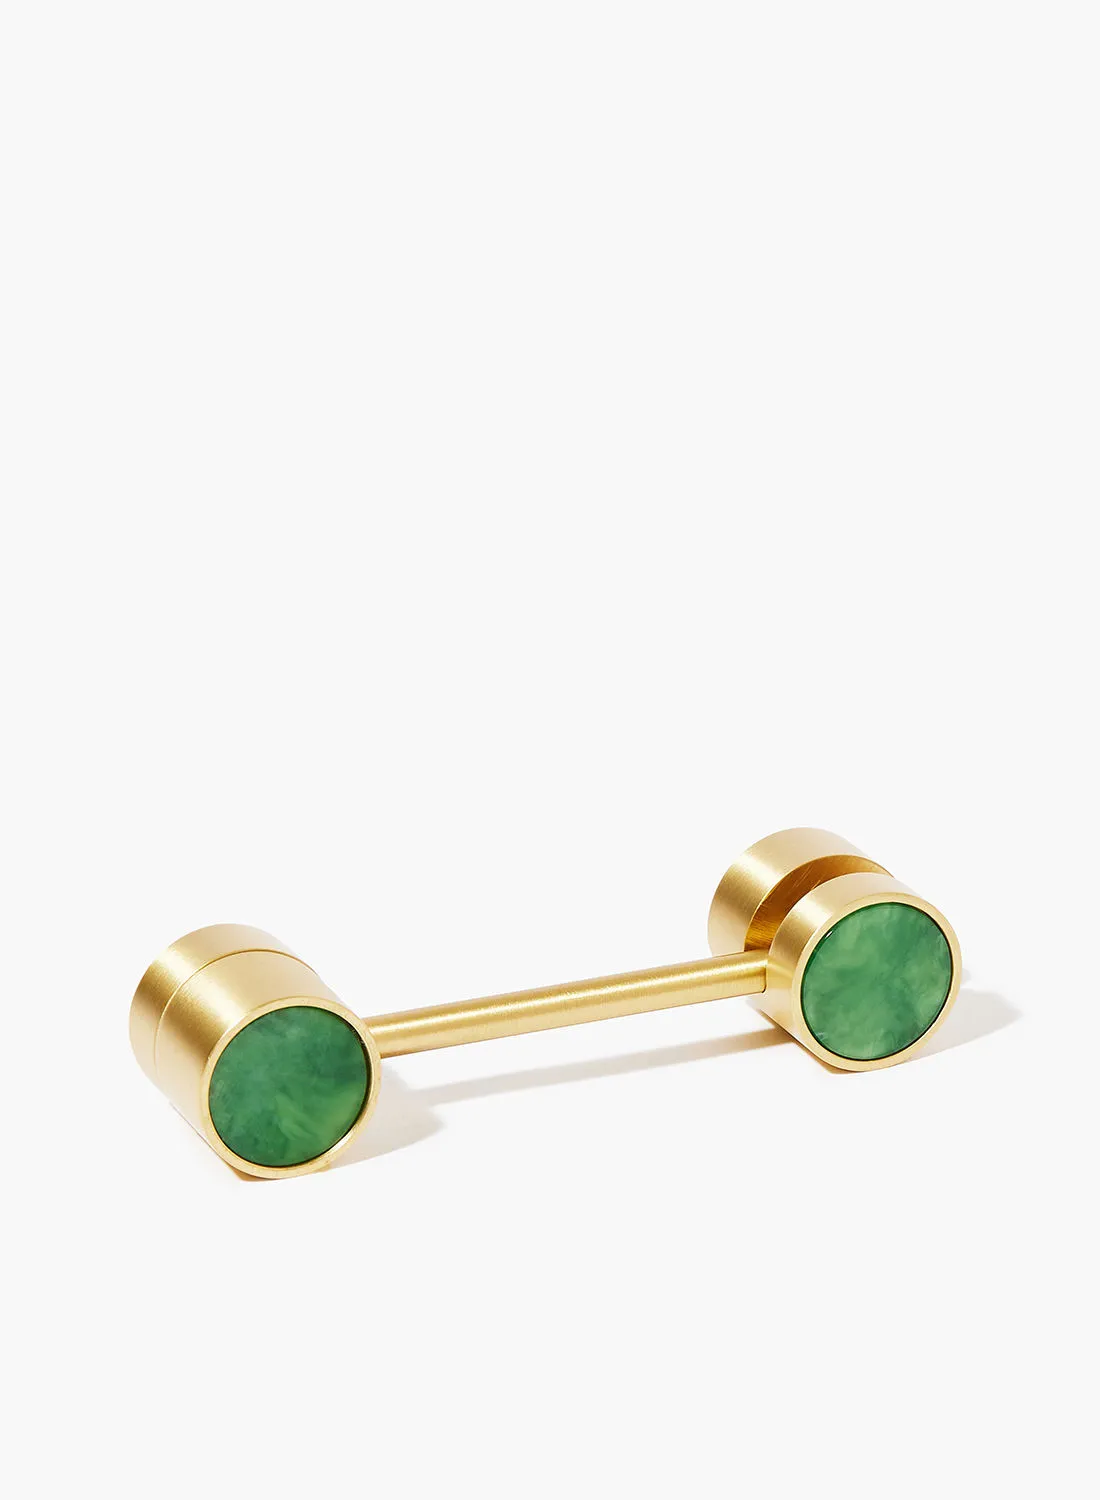 Amal Nordic Style Cabinet Drawer Pulls Knob Latch Dark Green/Brass 84 x 26 x 28millimeter